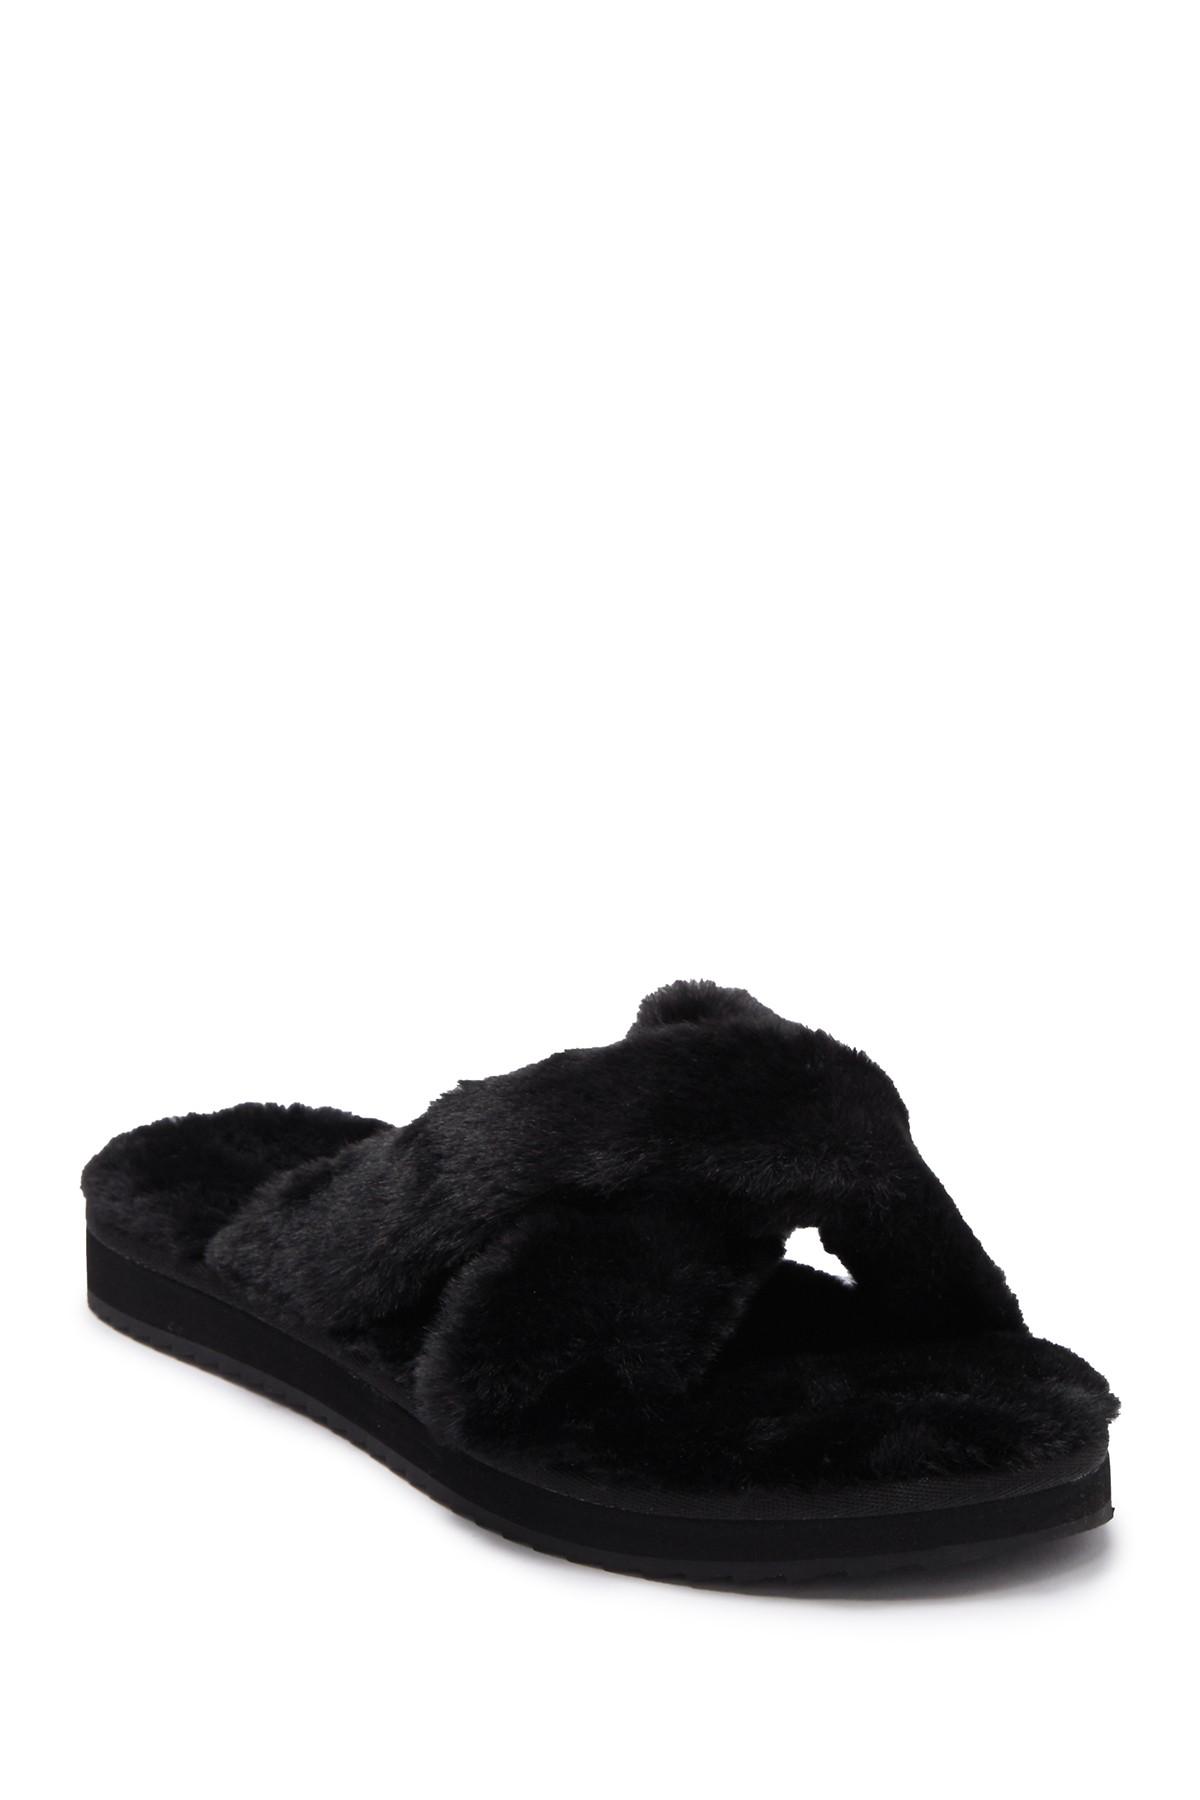 UGG Ballia Faux Fur Slide Slipper in Black - Lyst